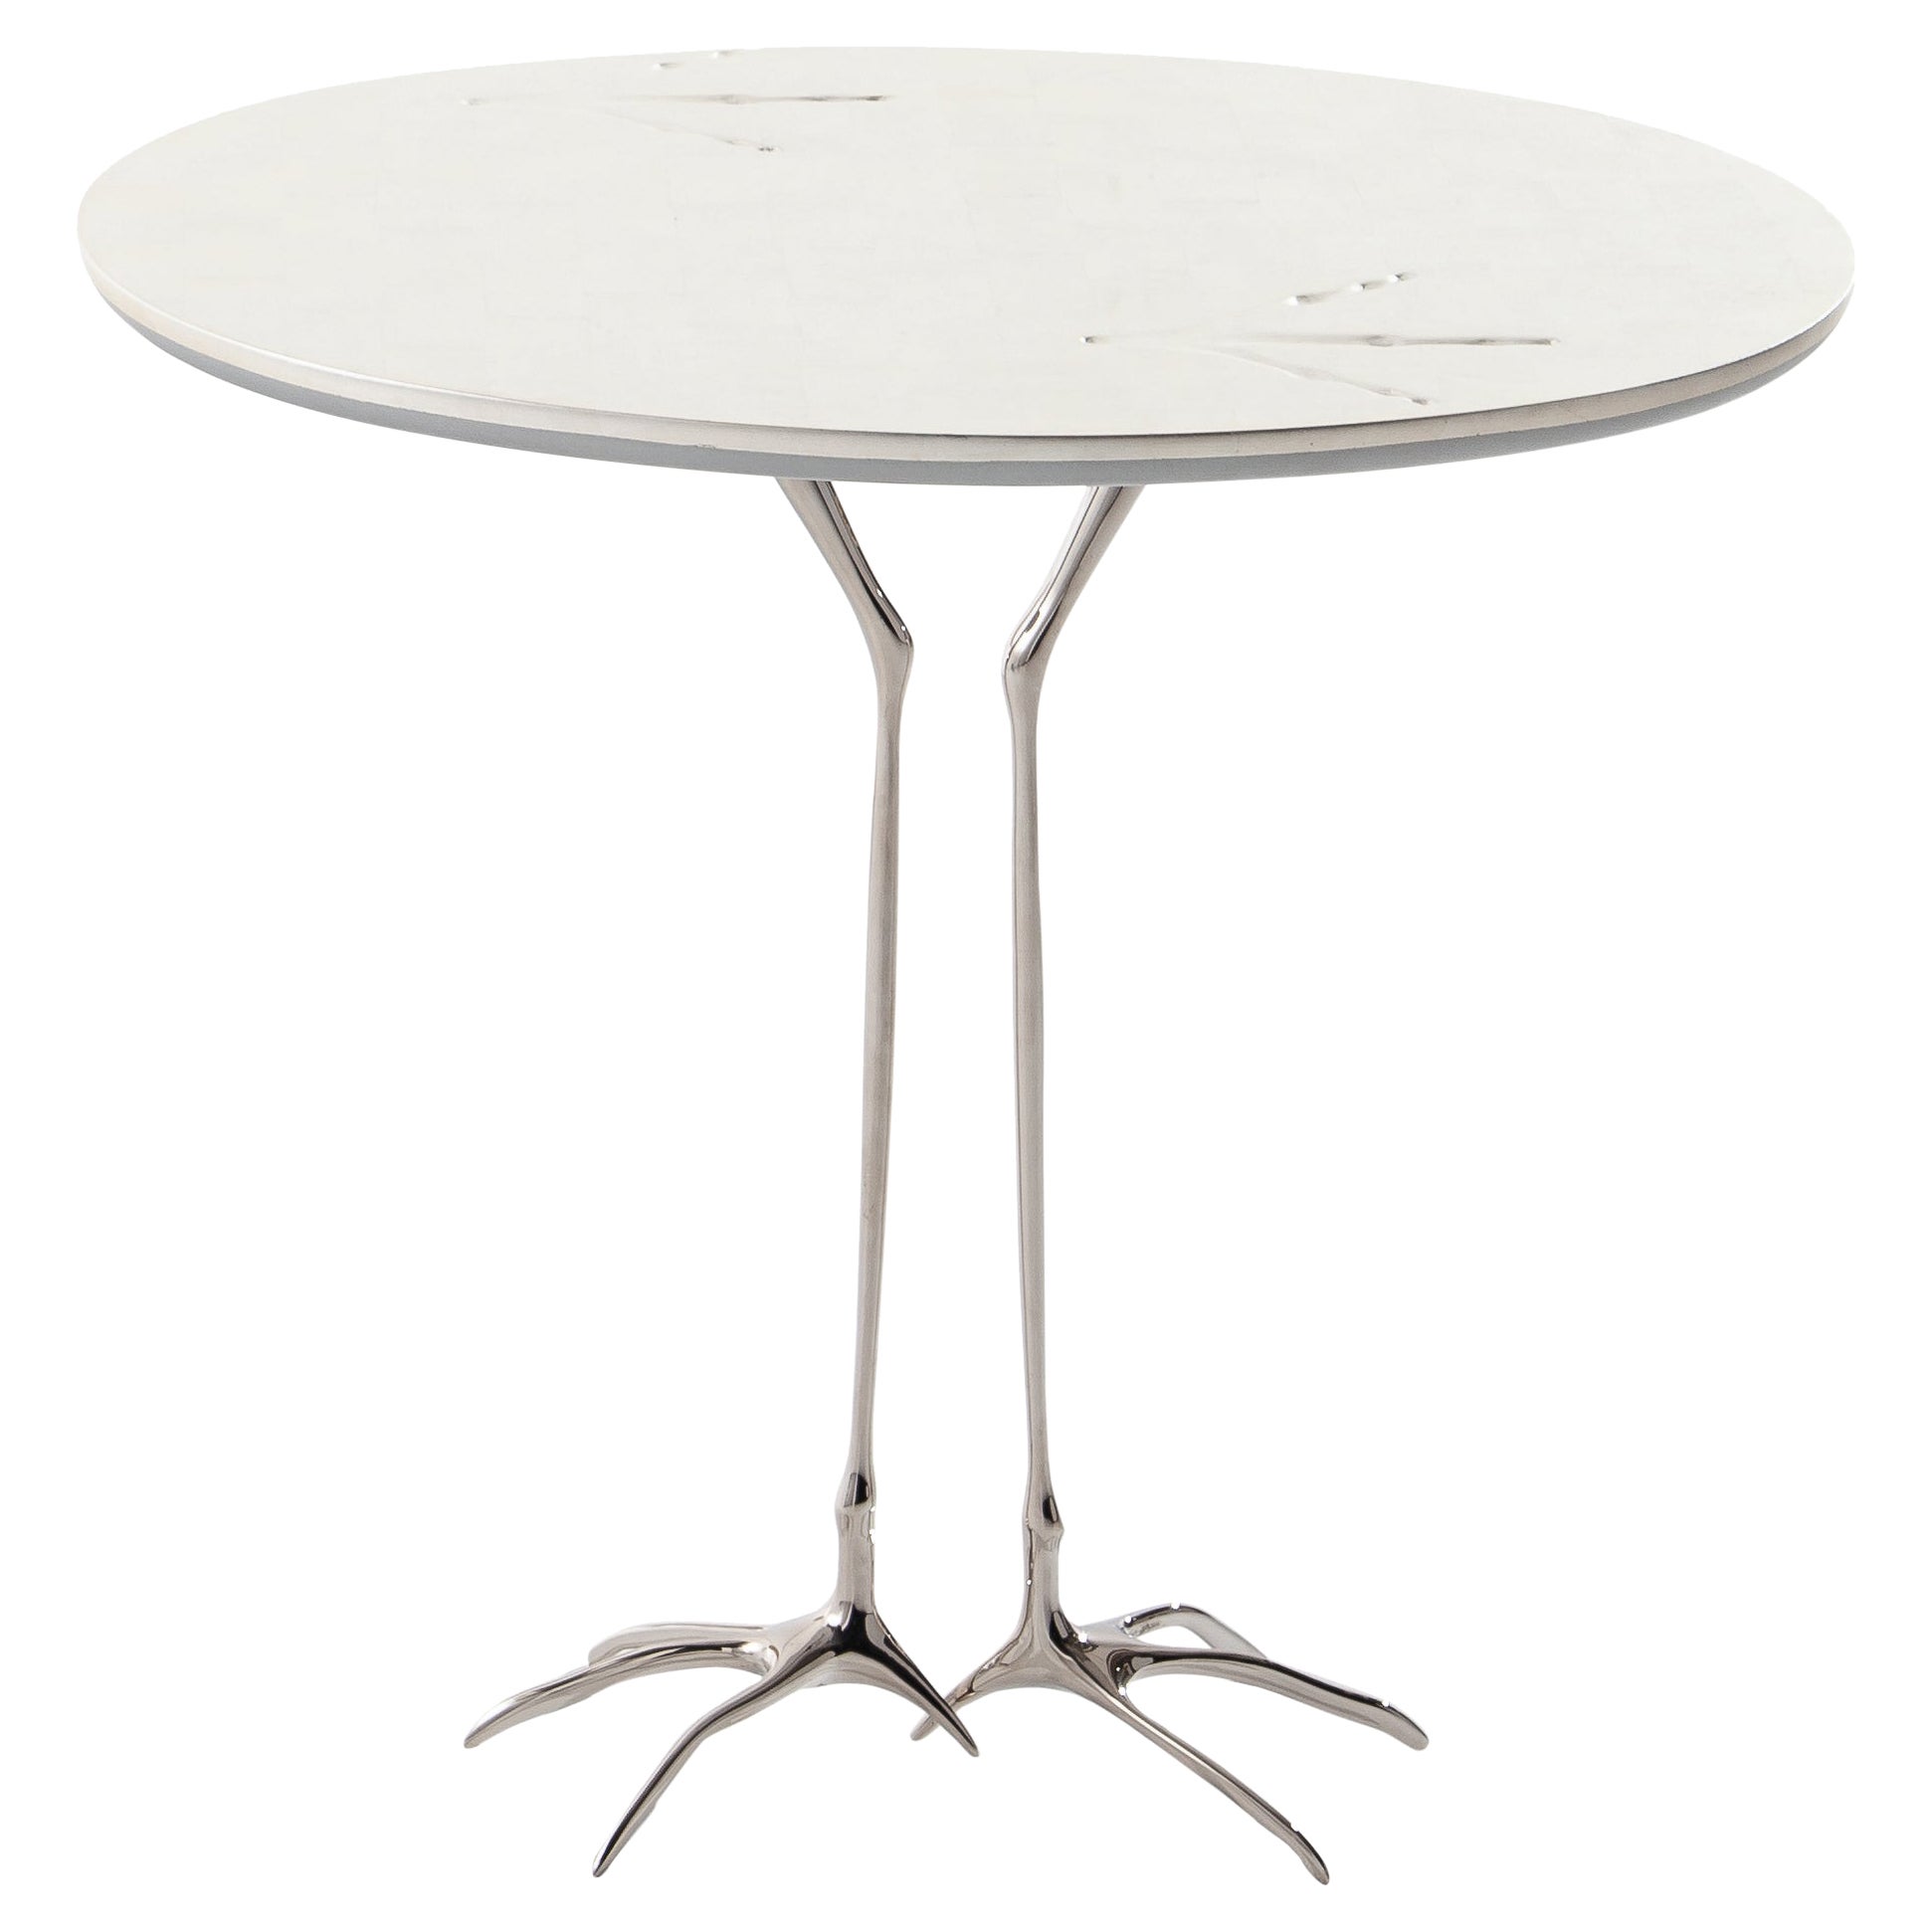 Table sculpturale Traccia de Meret Oppenheim